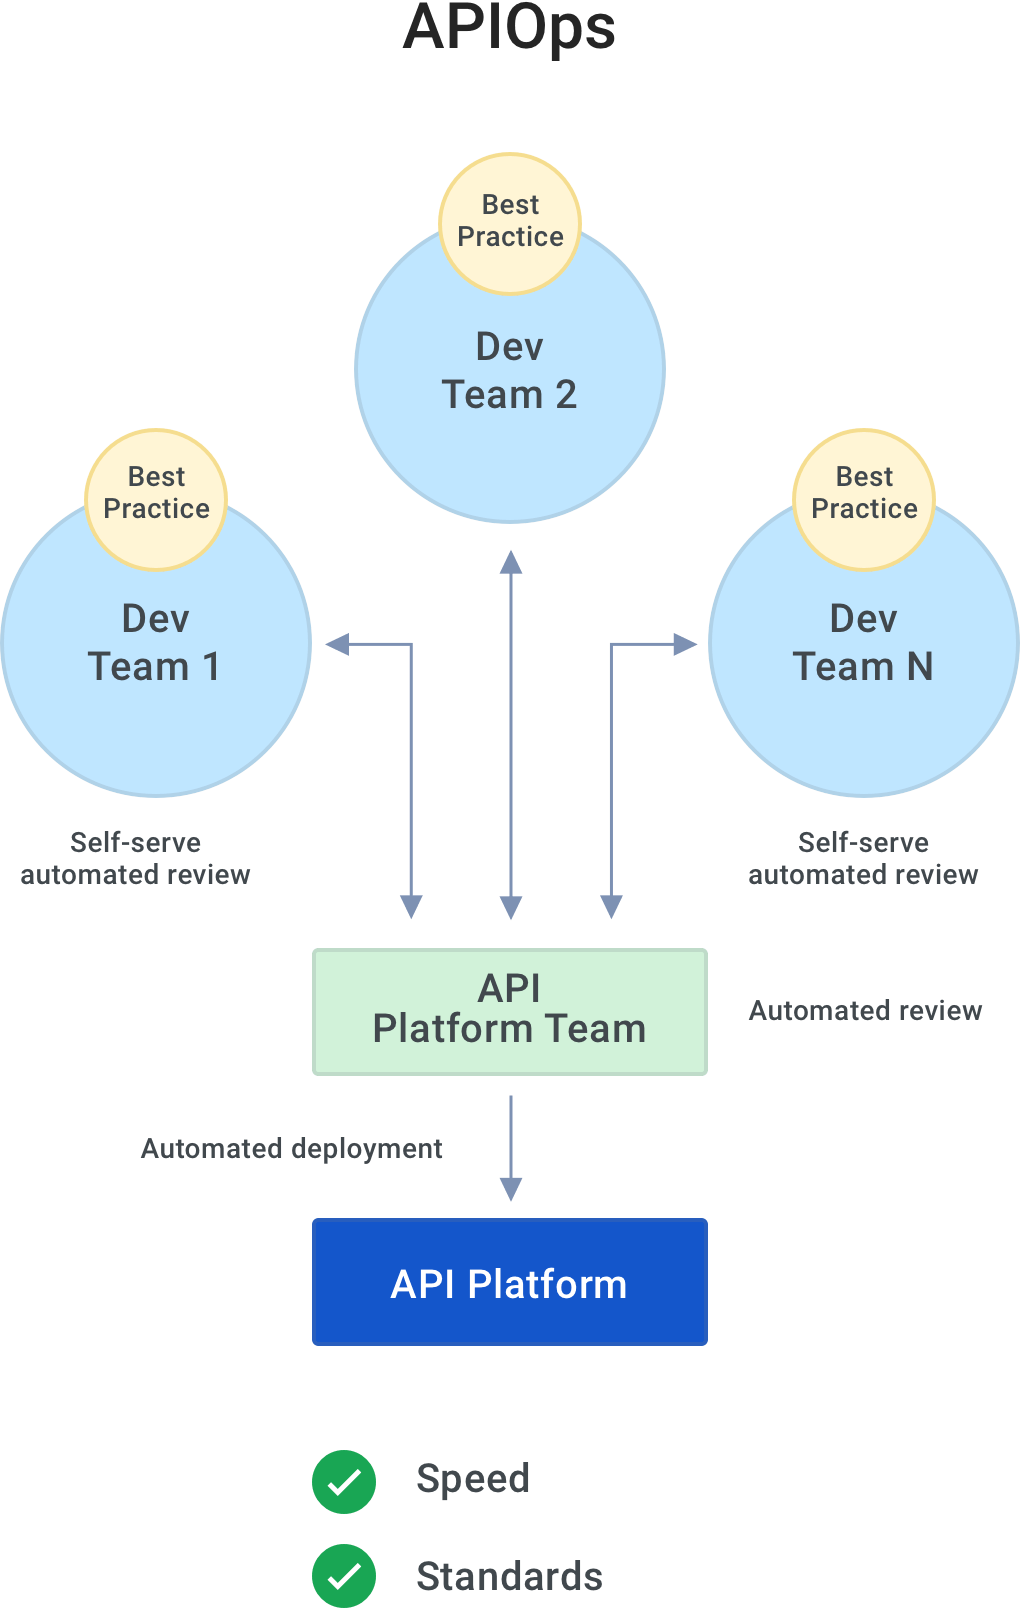 APIOps - API Platform team